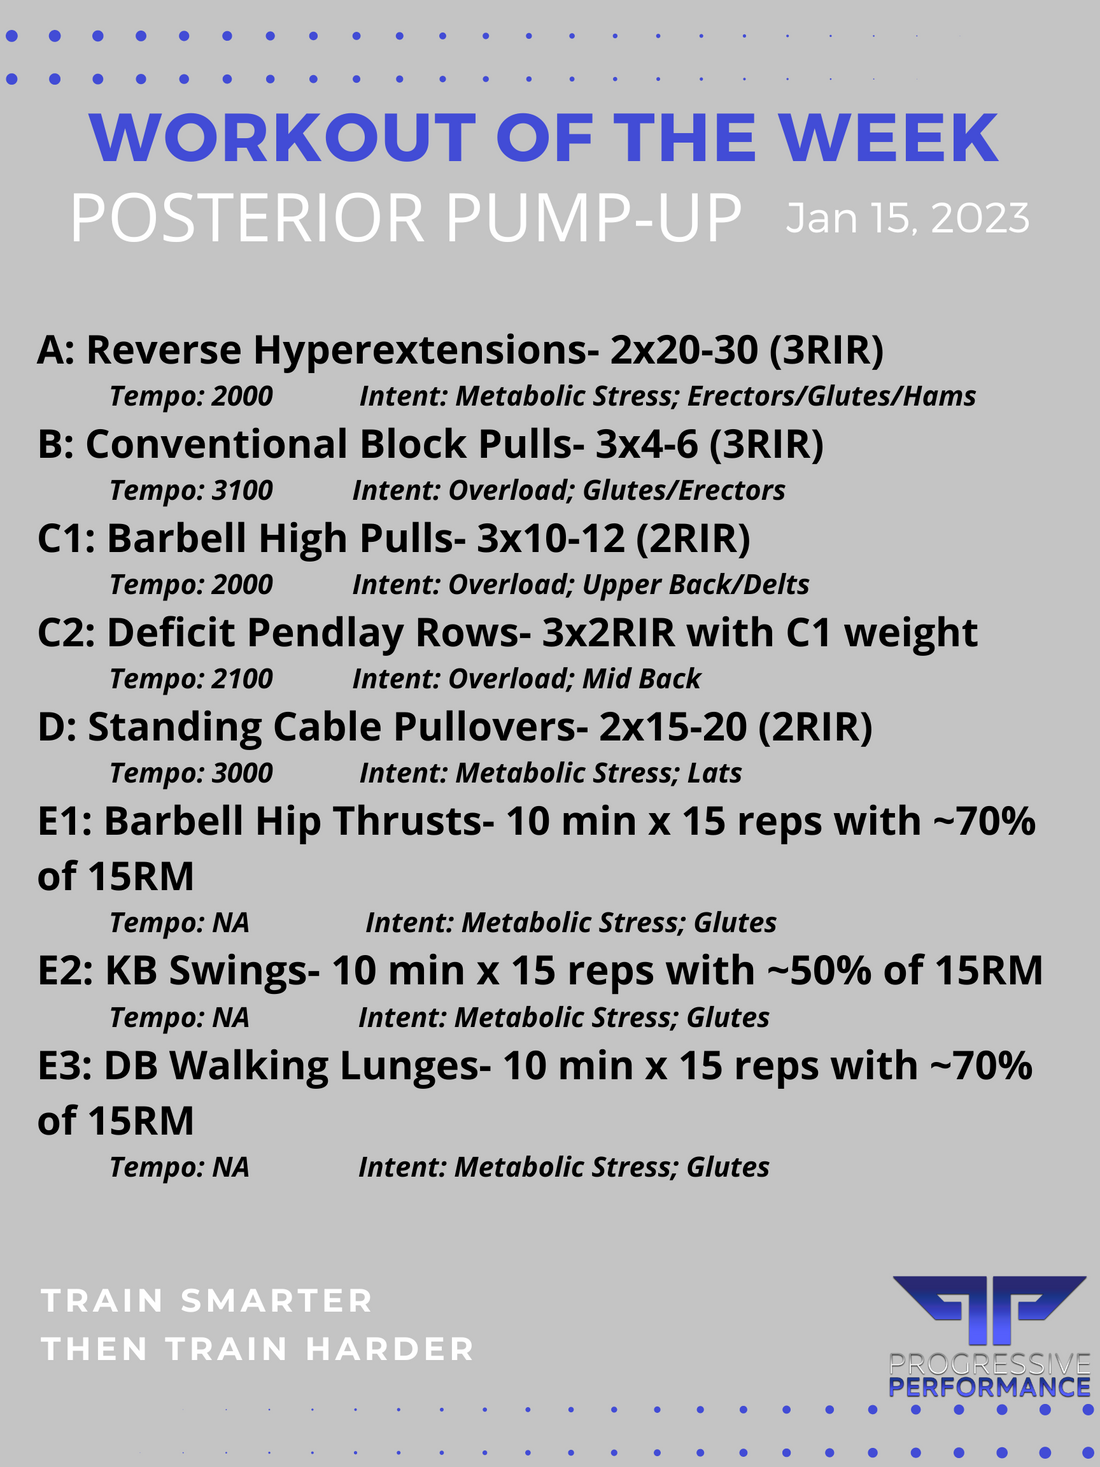 Posterior Pump-Up